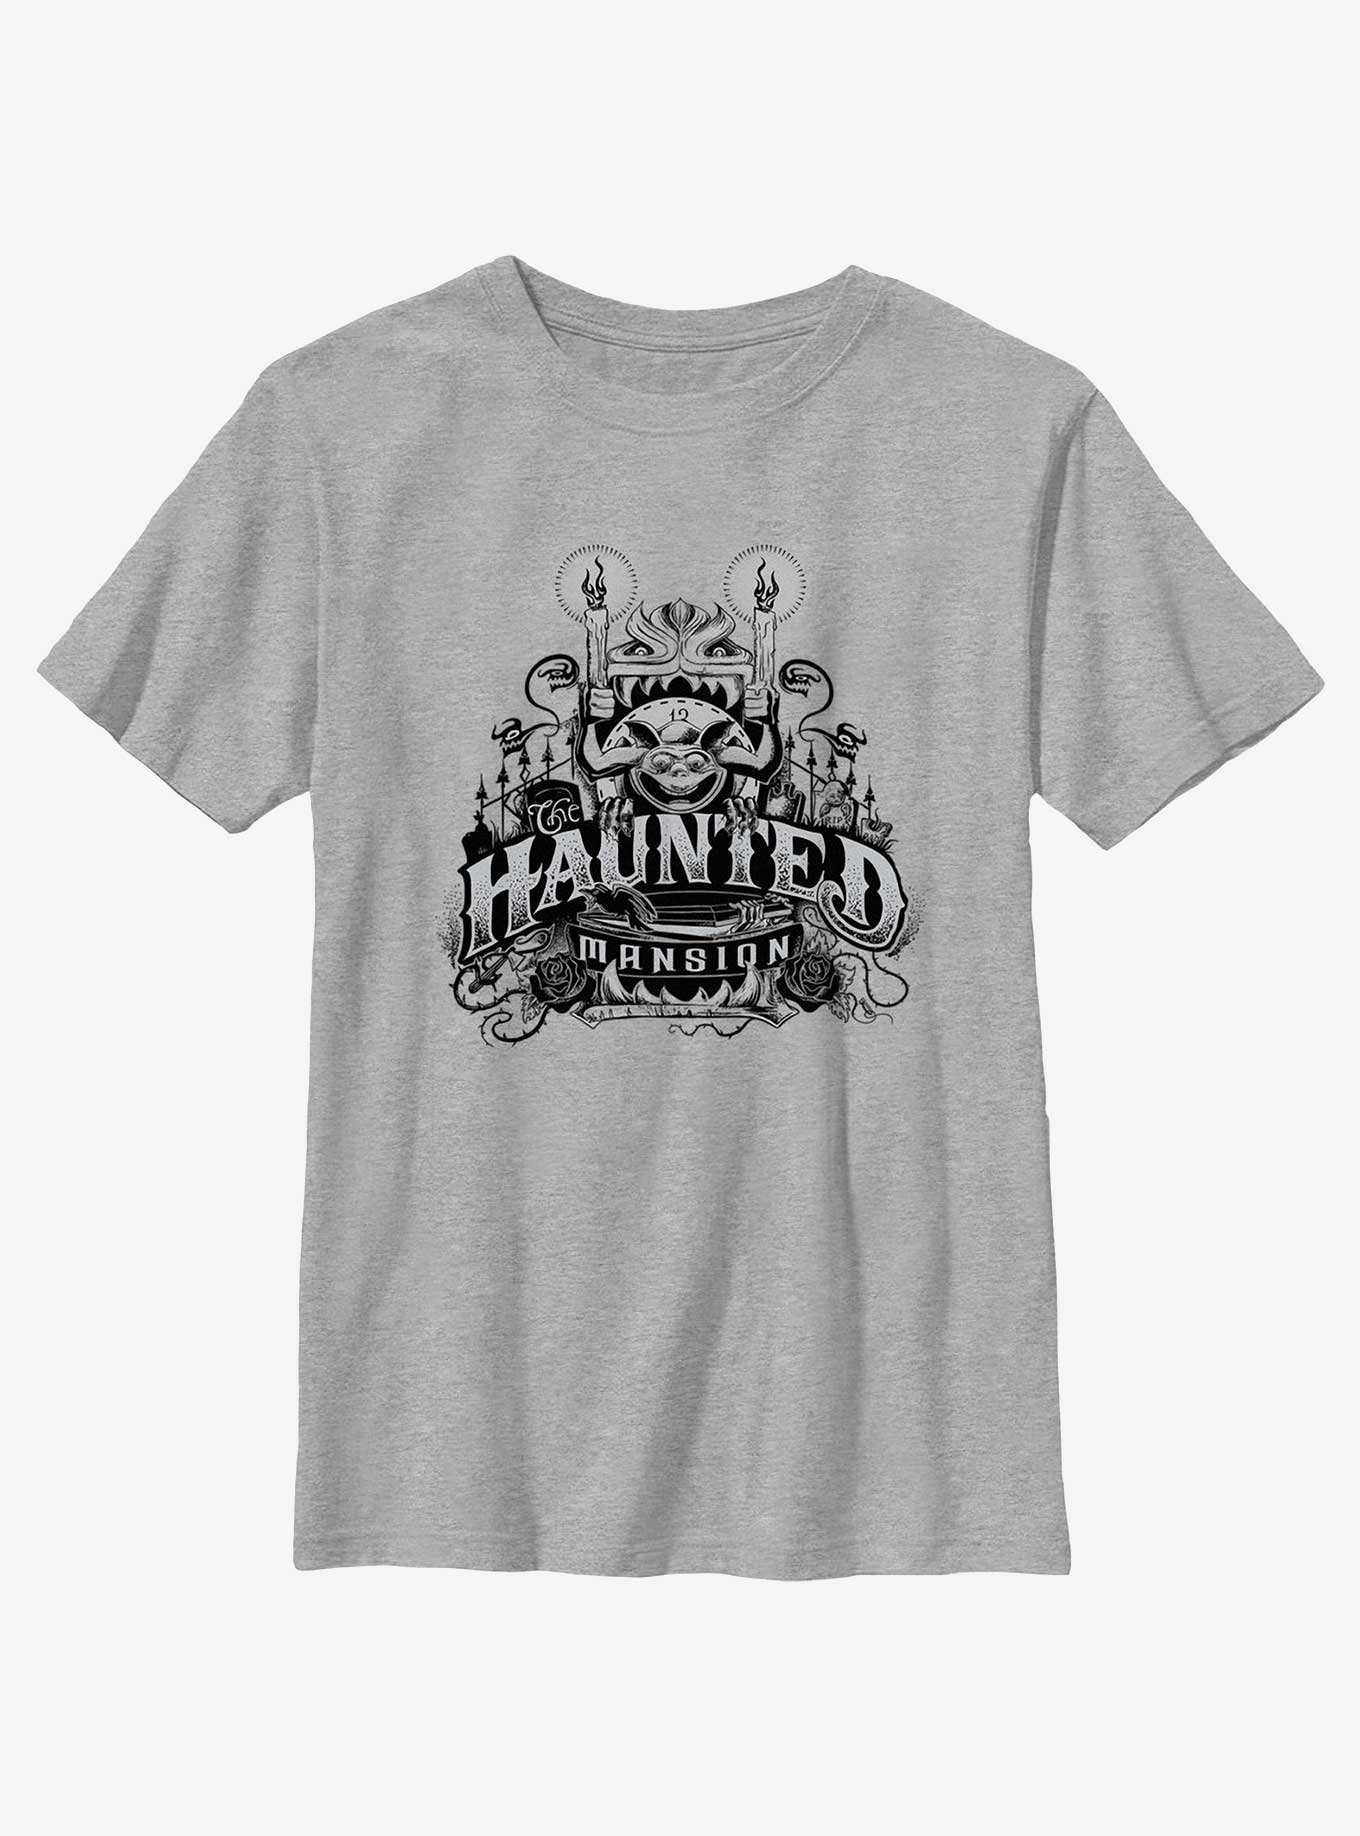 Disney Haunted Mansion Haunted Gargoyle Candles Youth T-Shirt, , hi-res